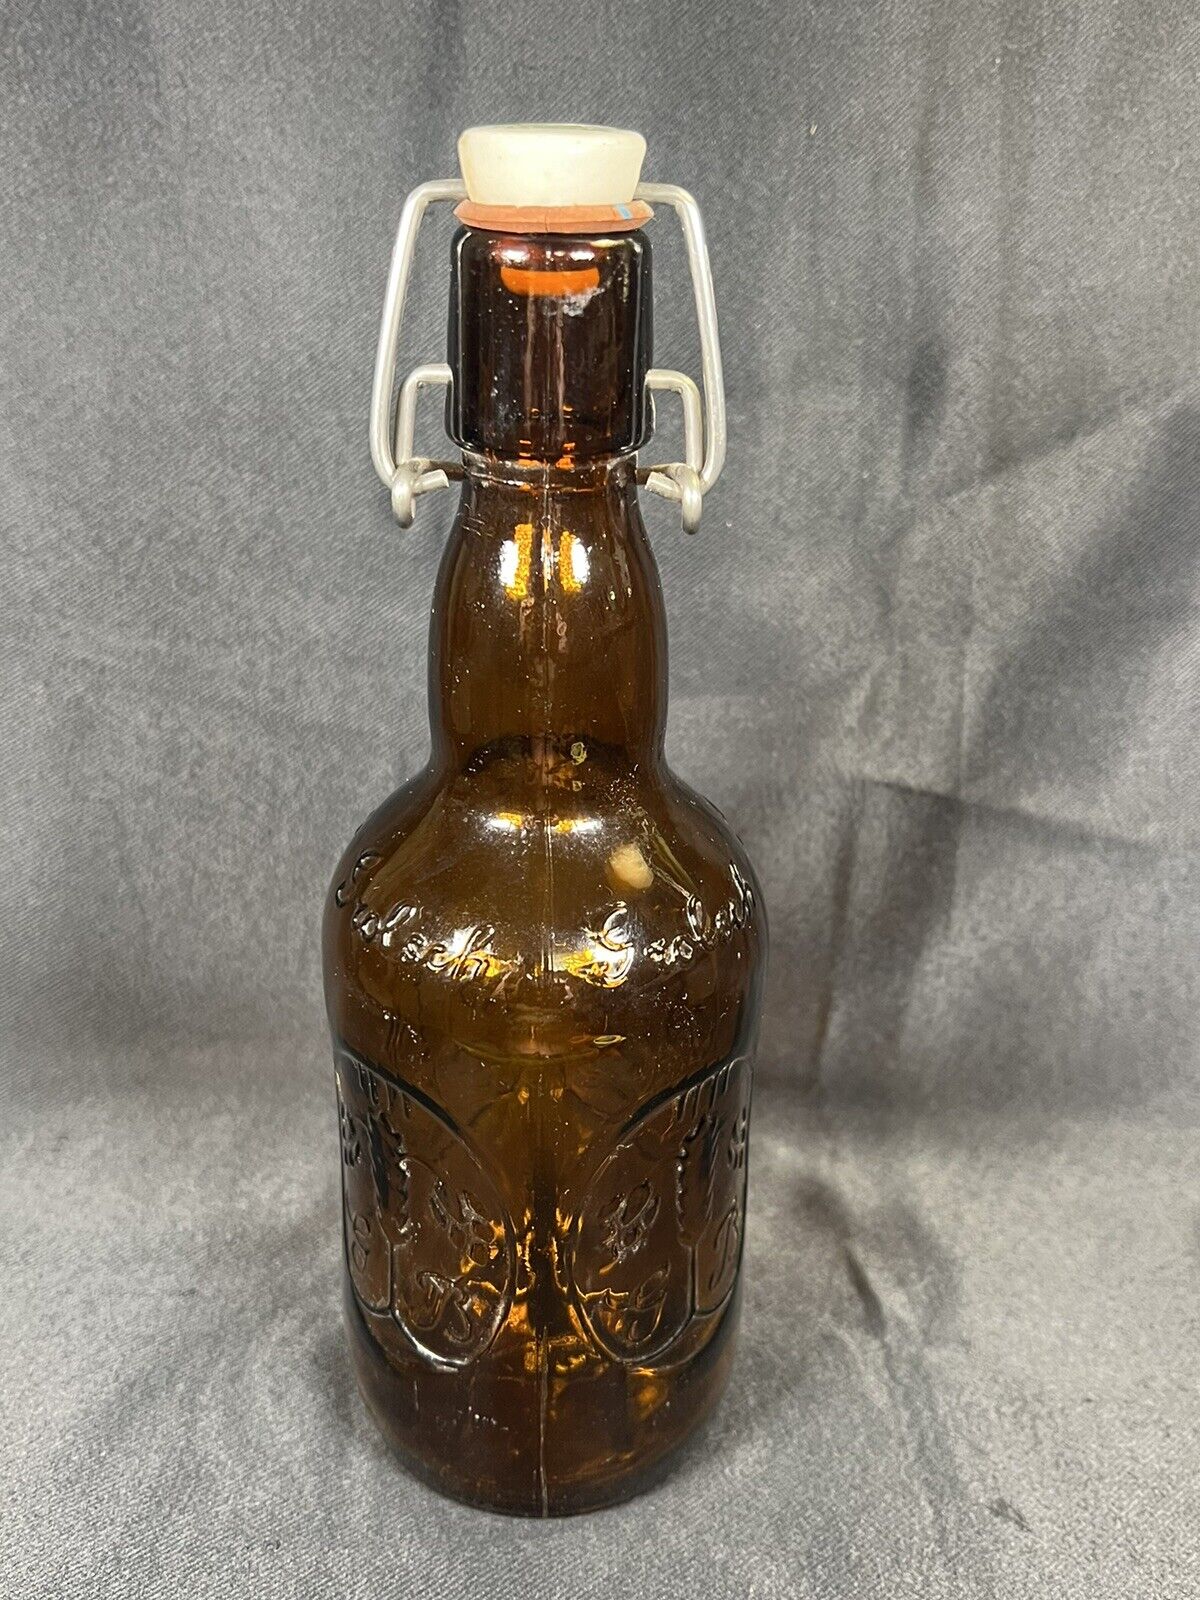 Vintage Grolsch Brown Glass Beer Bottle with Ceramic Flip Top Swing Cap